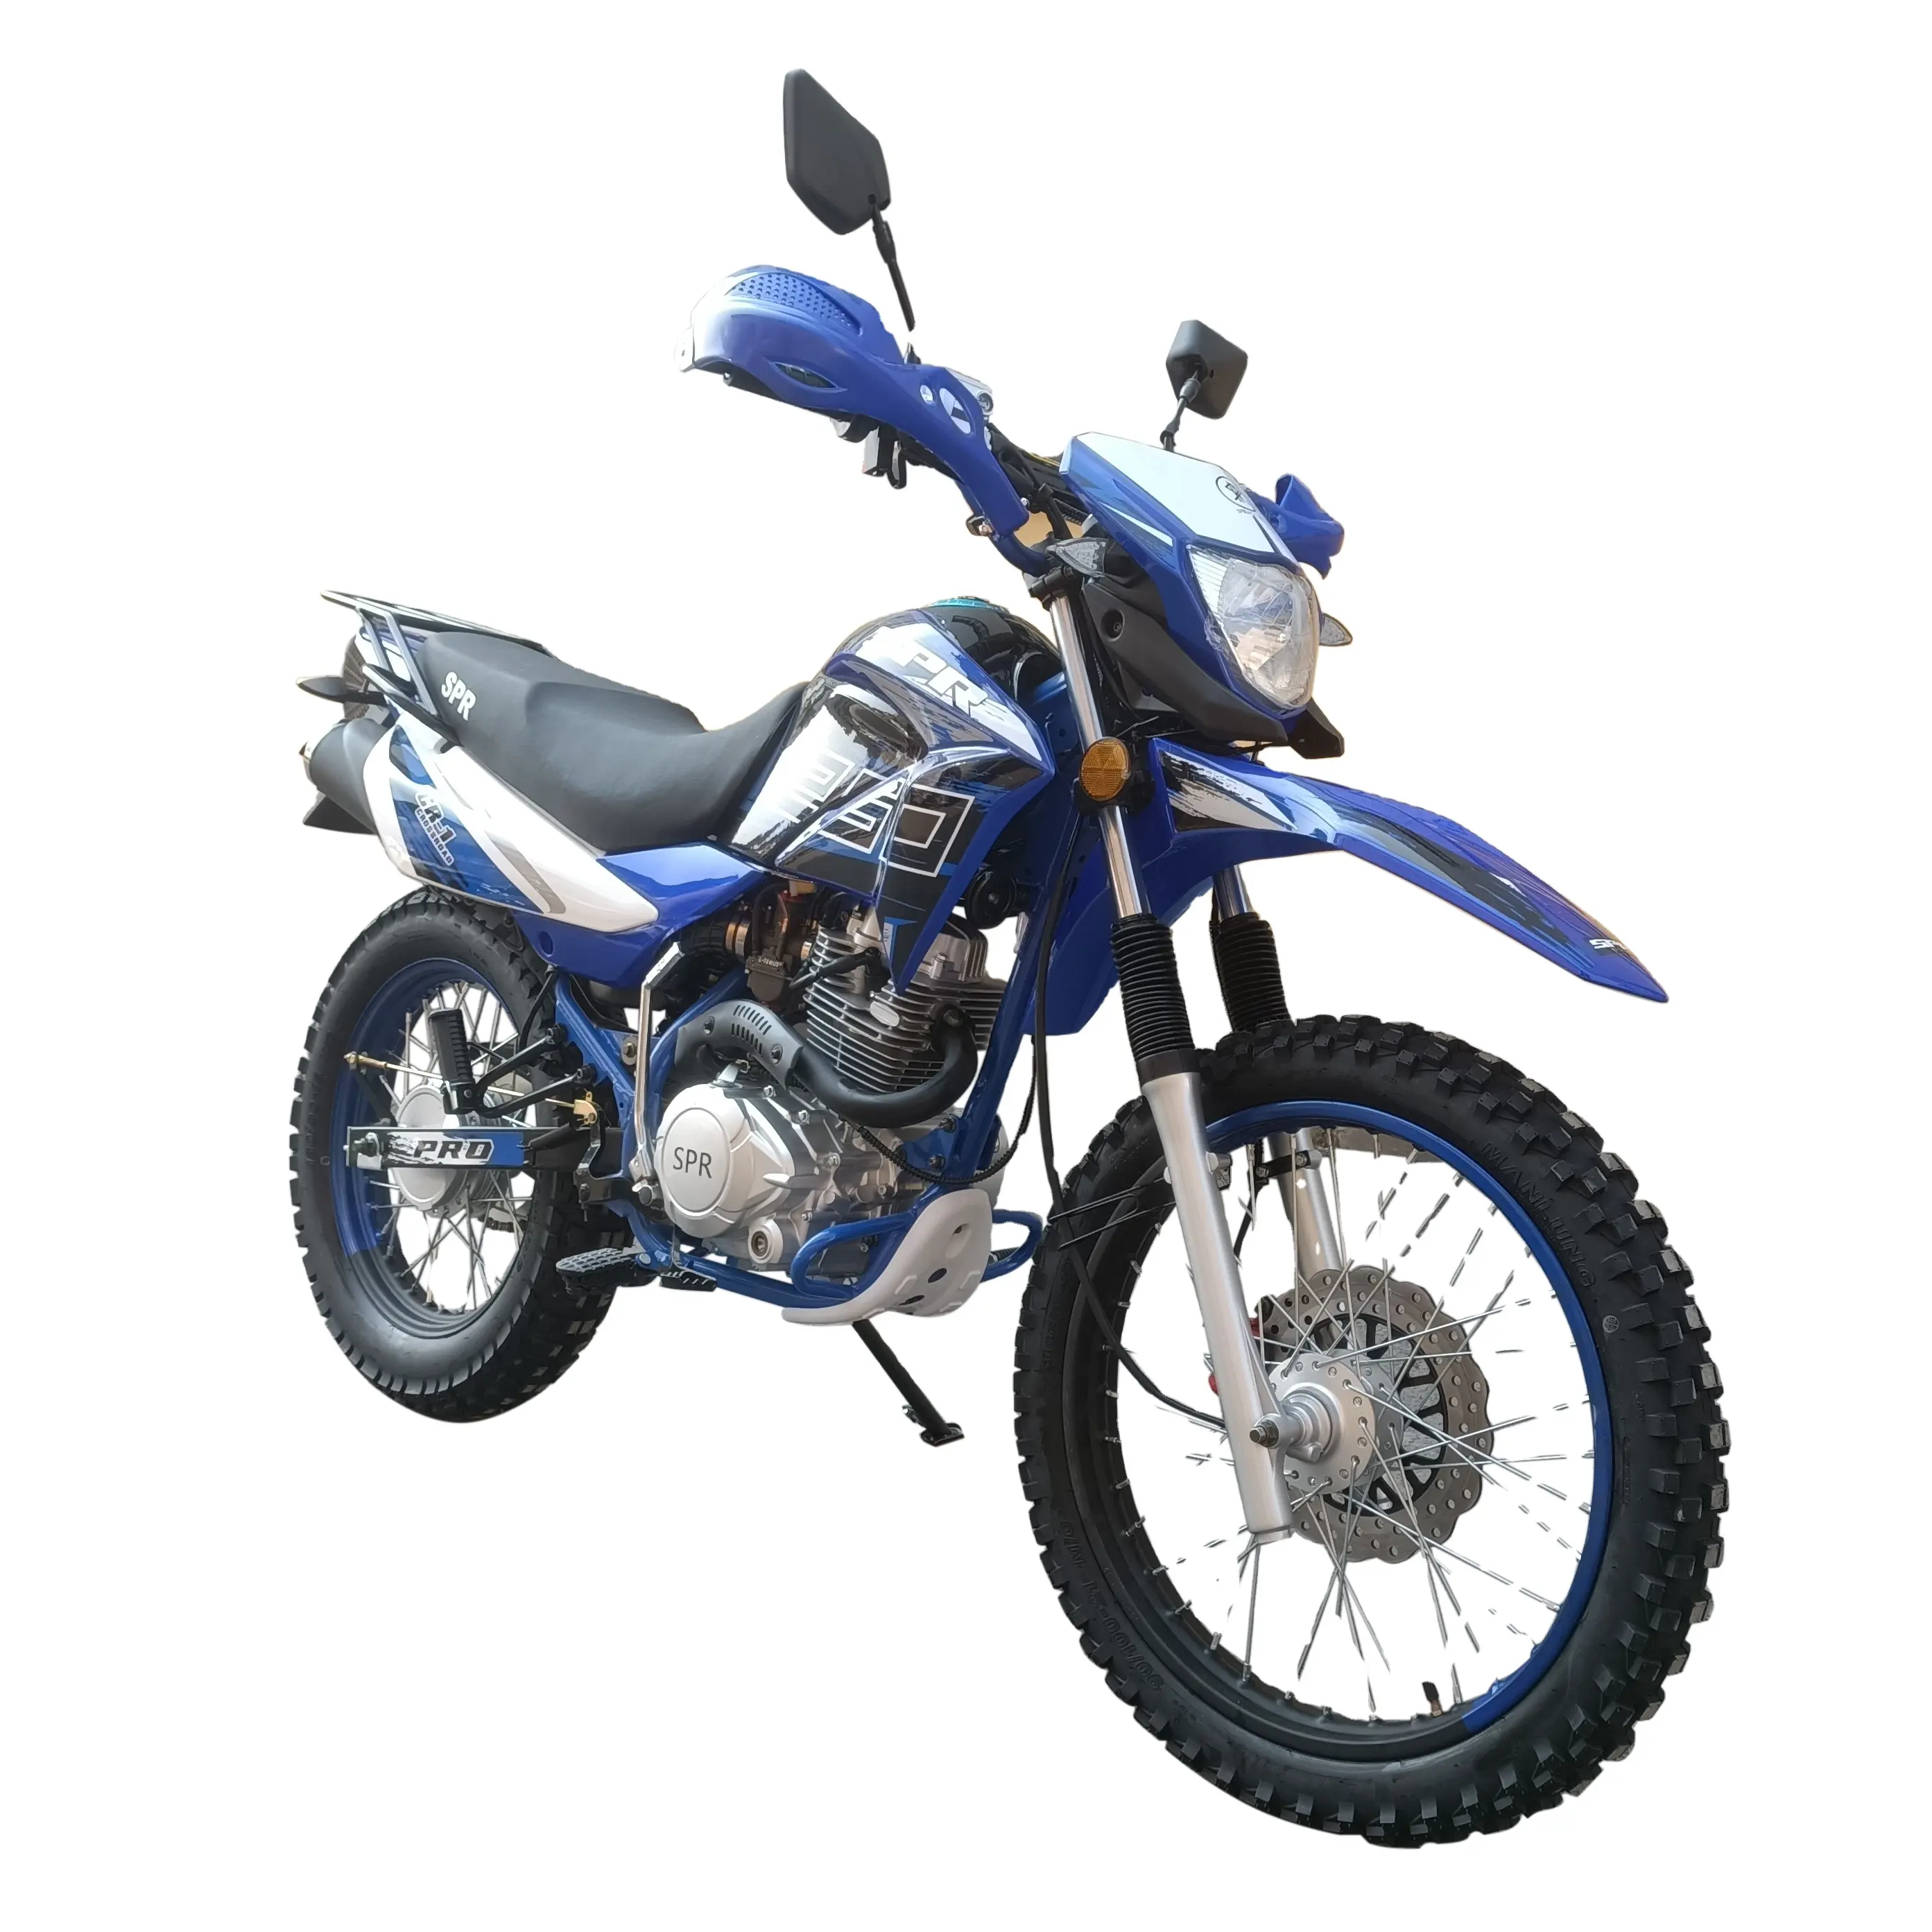 Novo adesivo clássico para motocicleta off road modelo OTTC, motocicleta de corrida 150cc 200cc CG 250cc com suporte traseiro